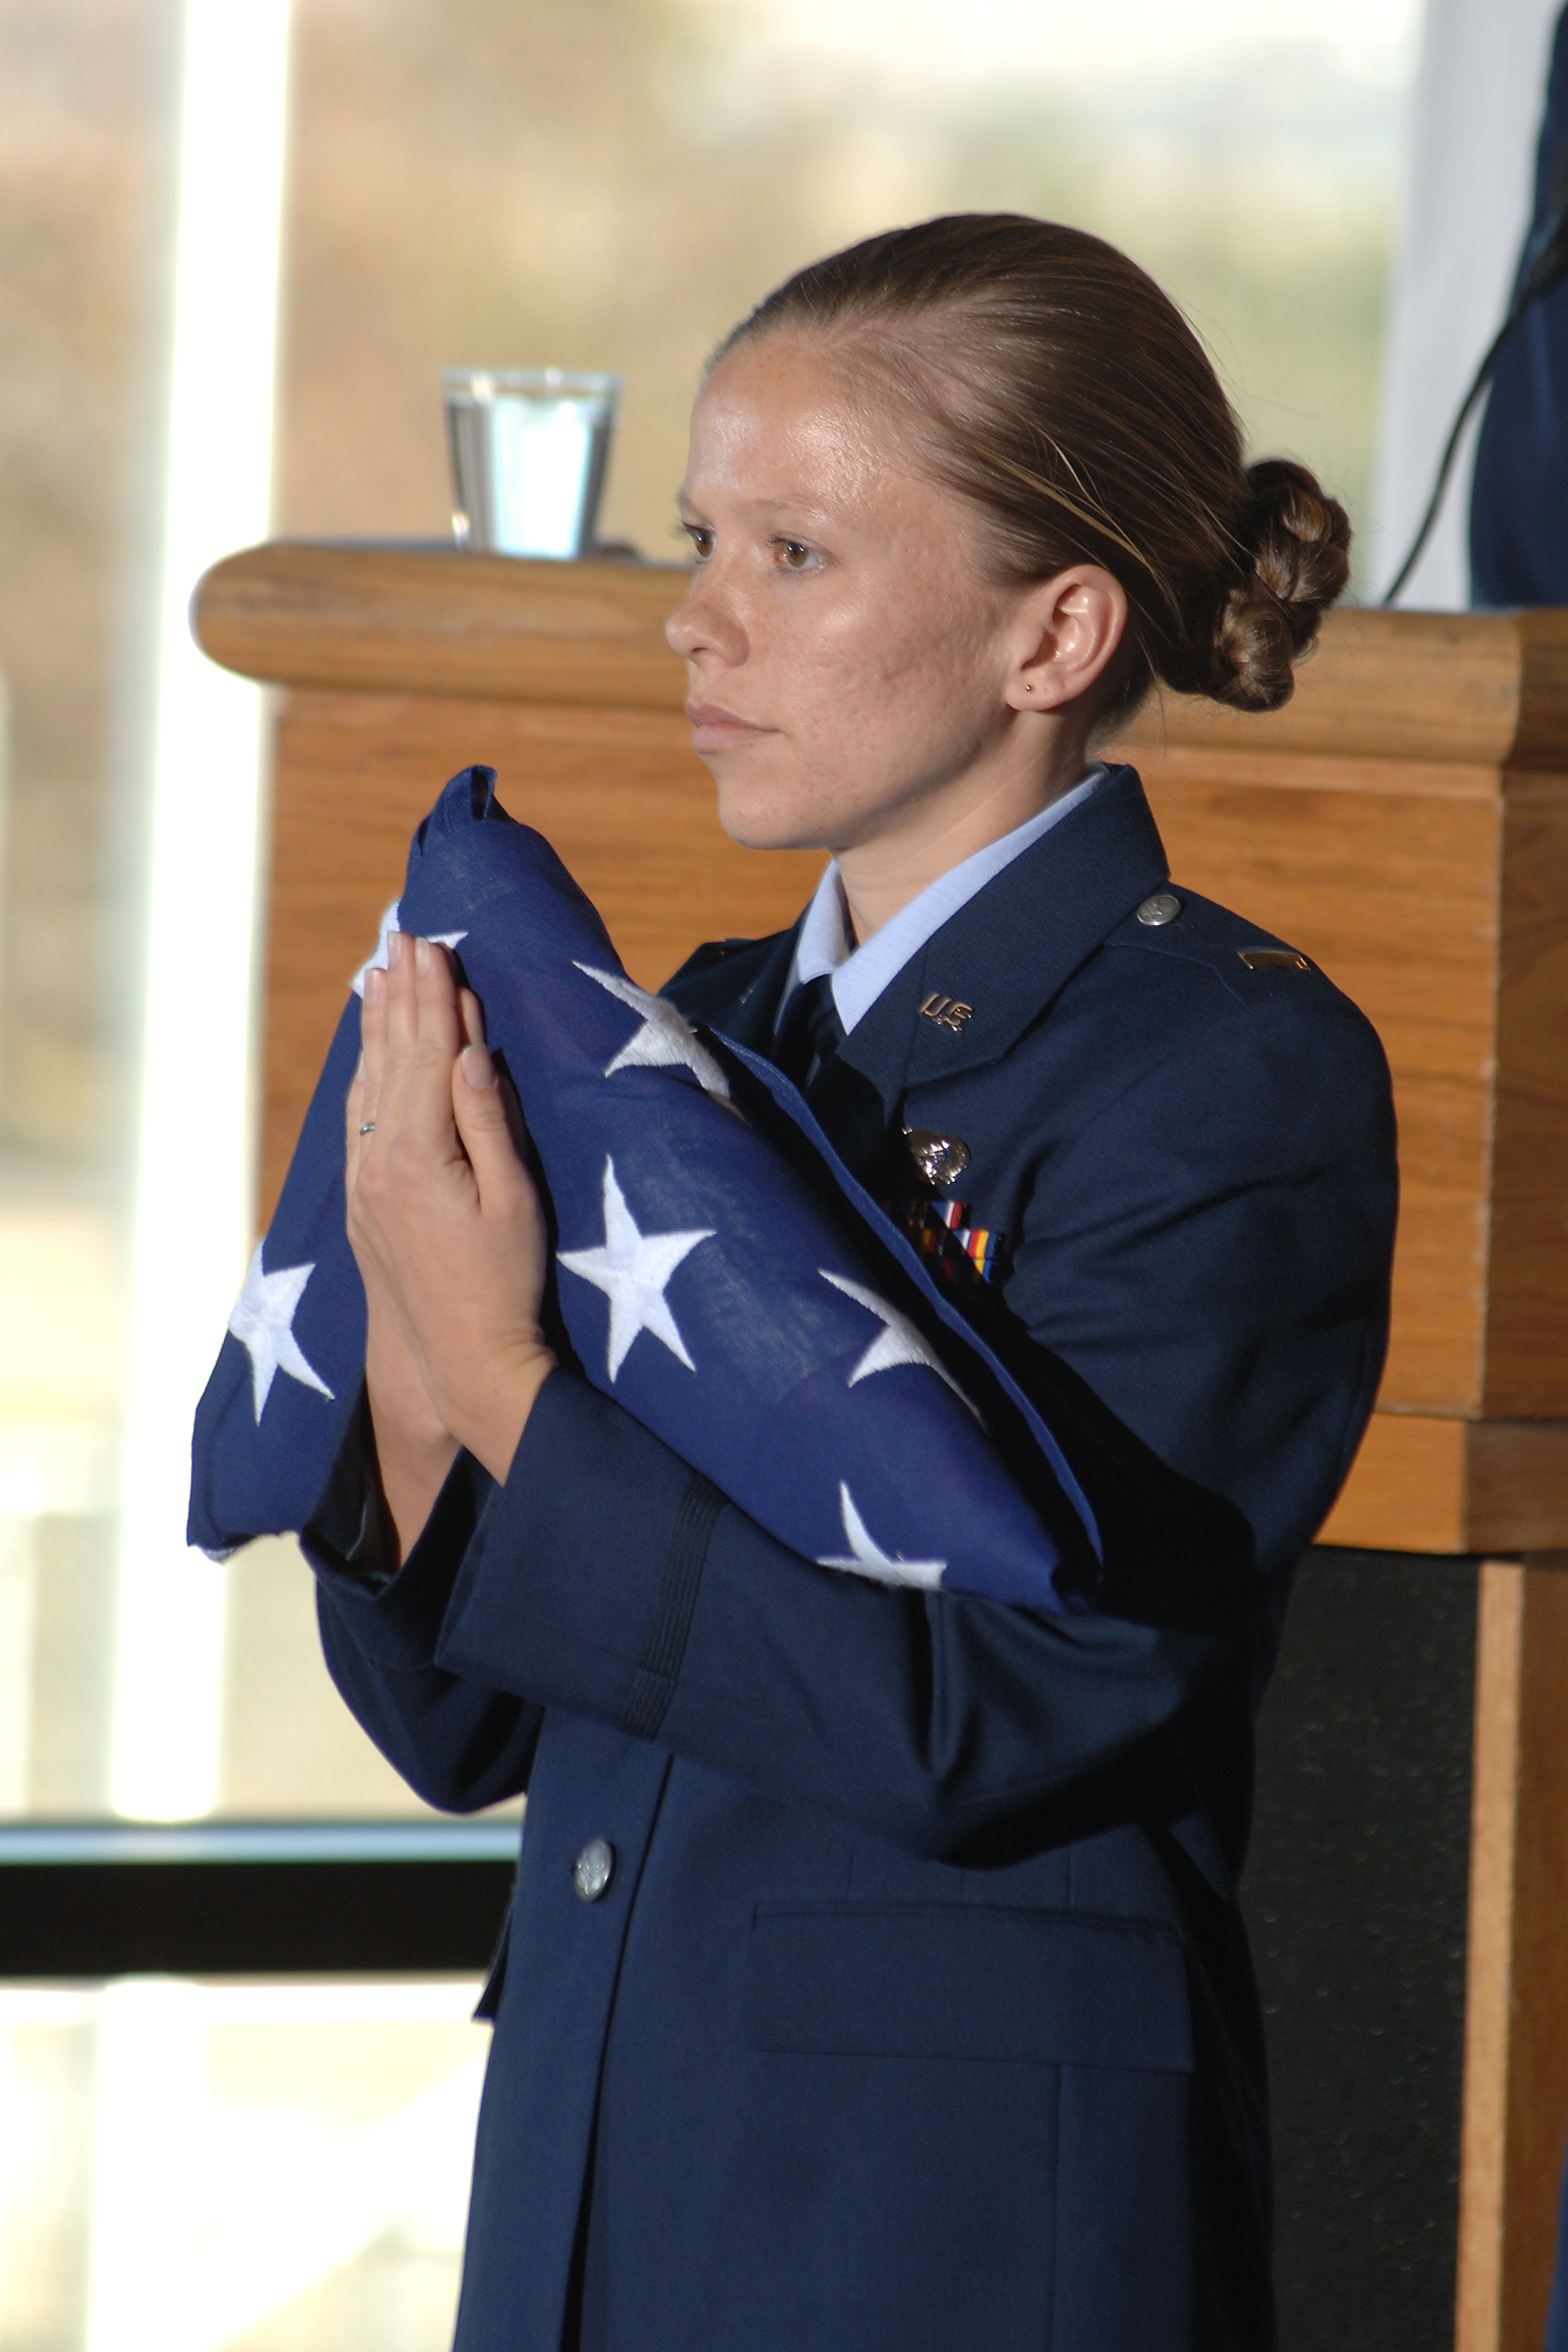 2nd lieutenant representative in the flag folding ceremony, circa 2005